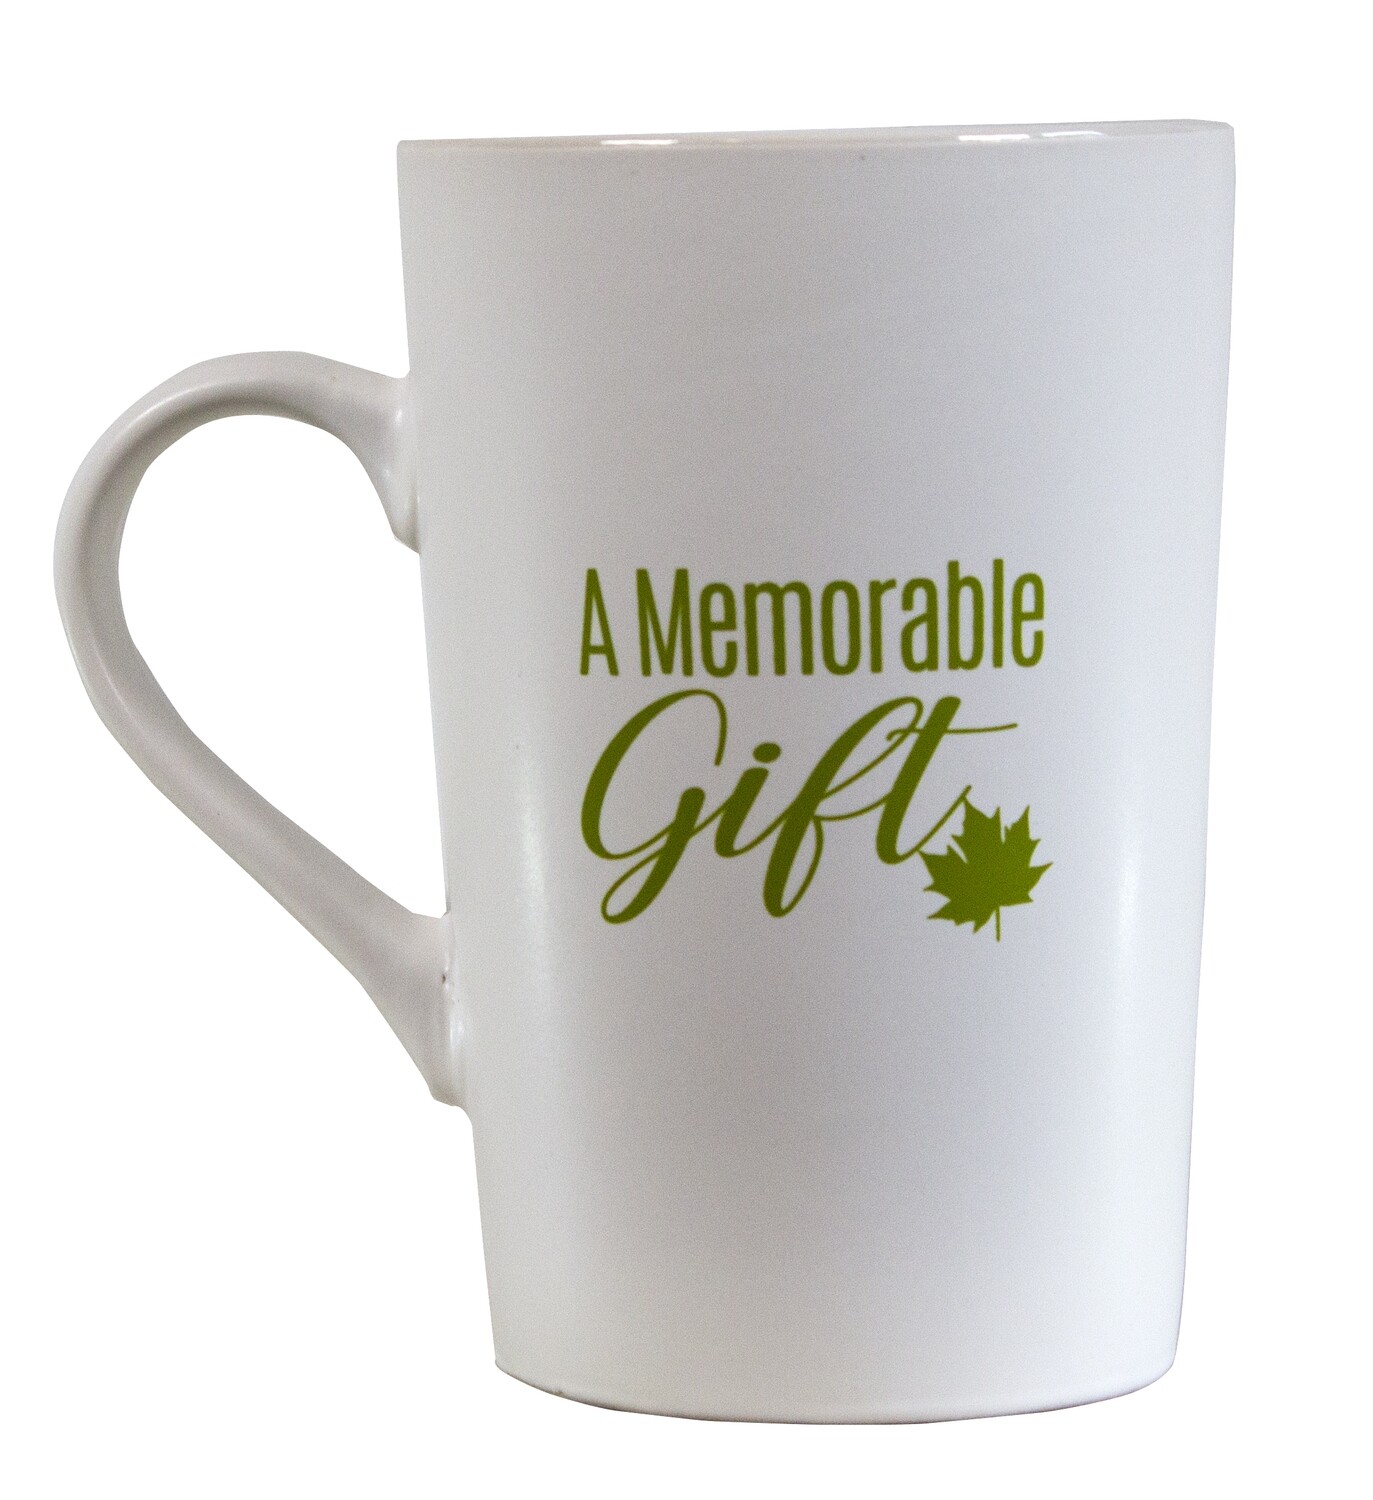 Large sturdy mug with A Memorable Gift logo